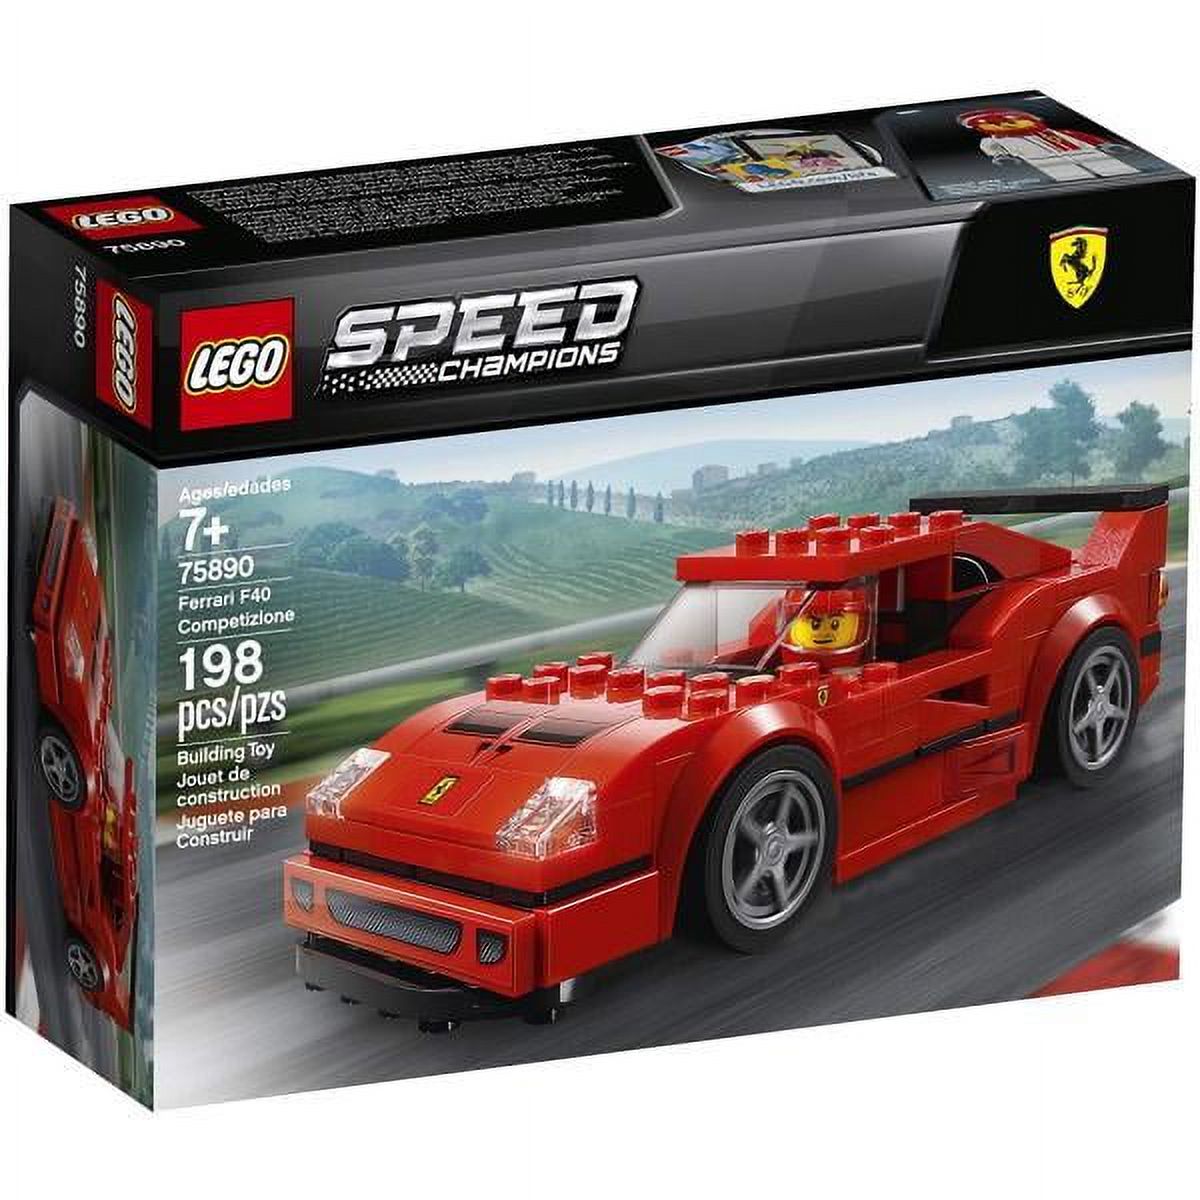 LEGO Speed Champions Ferrari F40 Competizione 75890 Building Kit - image 1 of 8